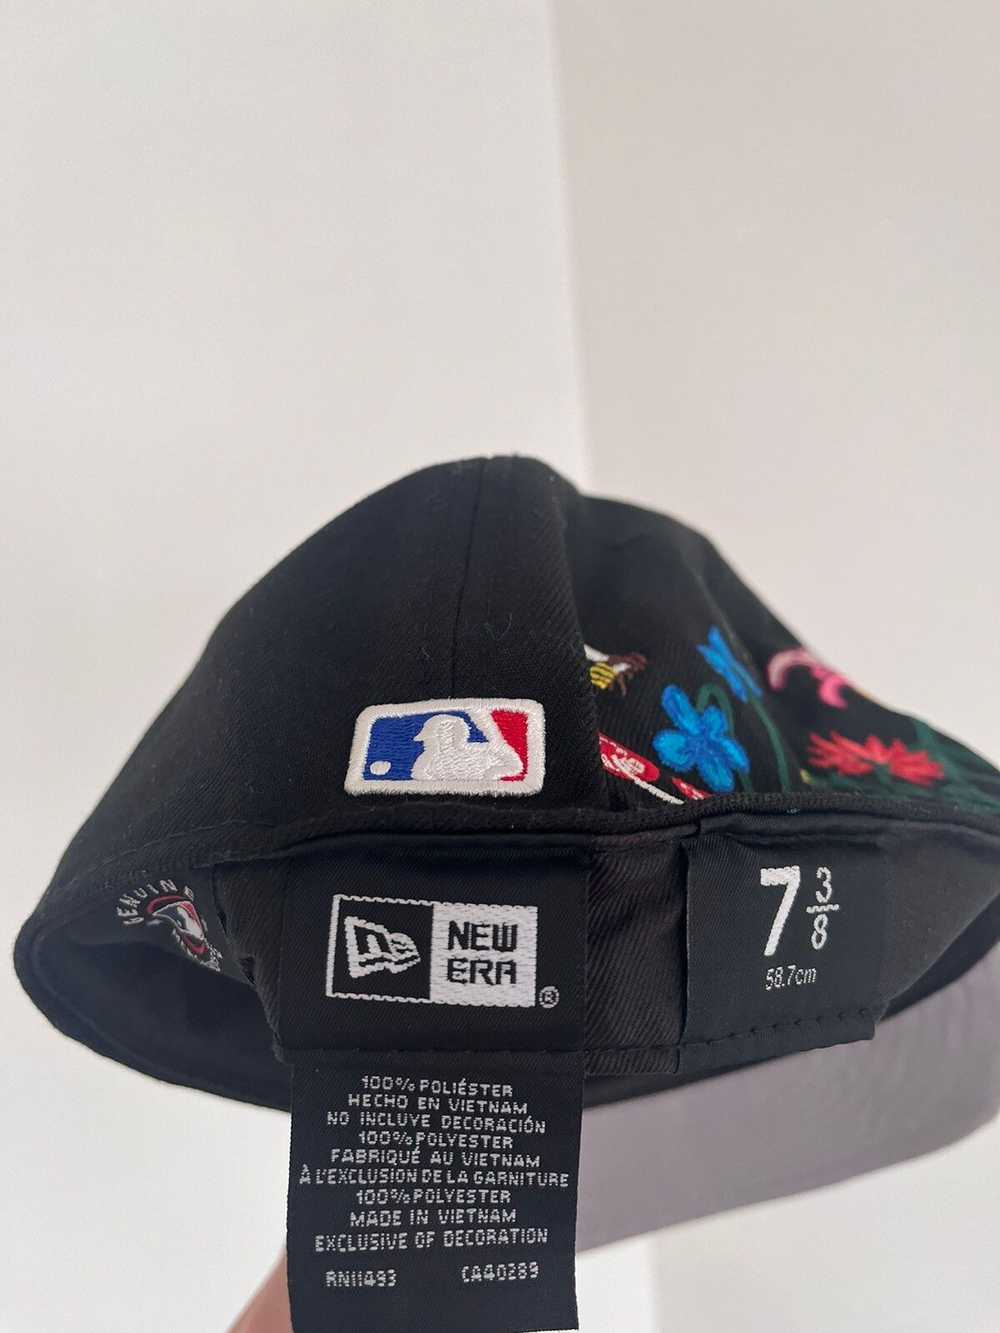 New Era Black Sox Floral hat - image 6